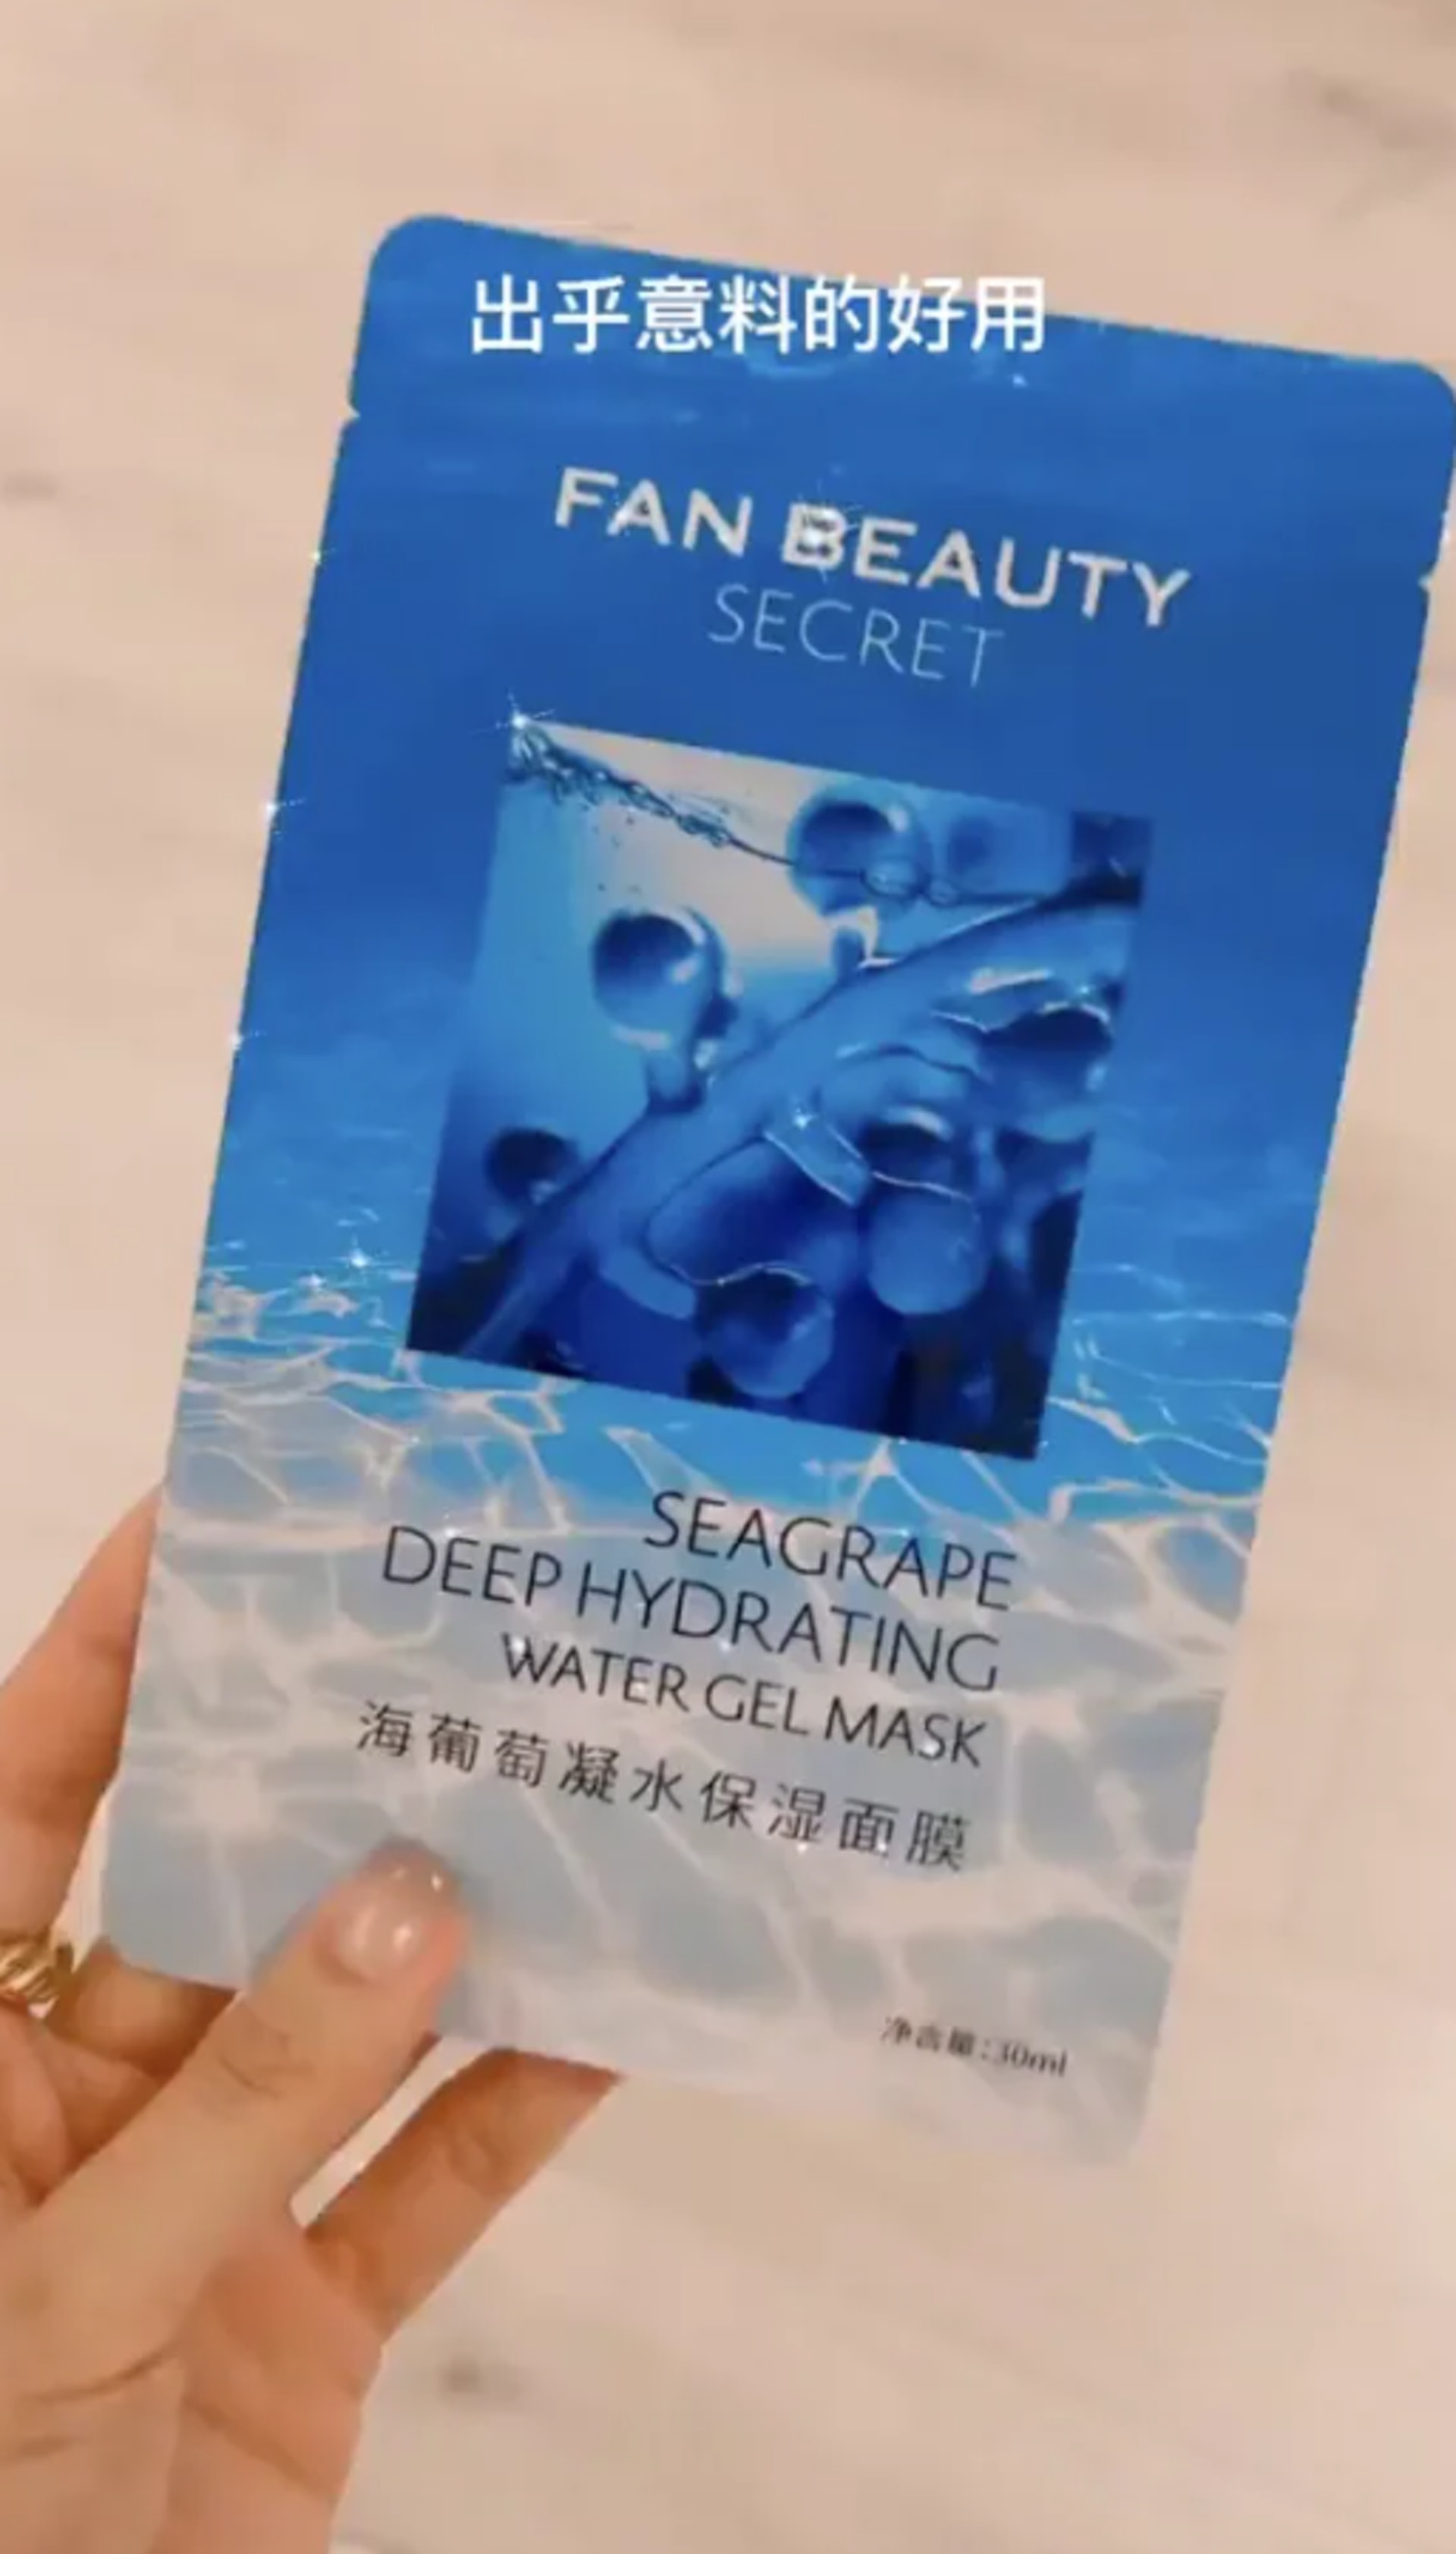 Fan Beauty Secret Seagrape Deep Hydrating Water Gel Mask質地透薄，使用時非常貼服全臉，讓全臉都可以有效地吸收面膜的精華。